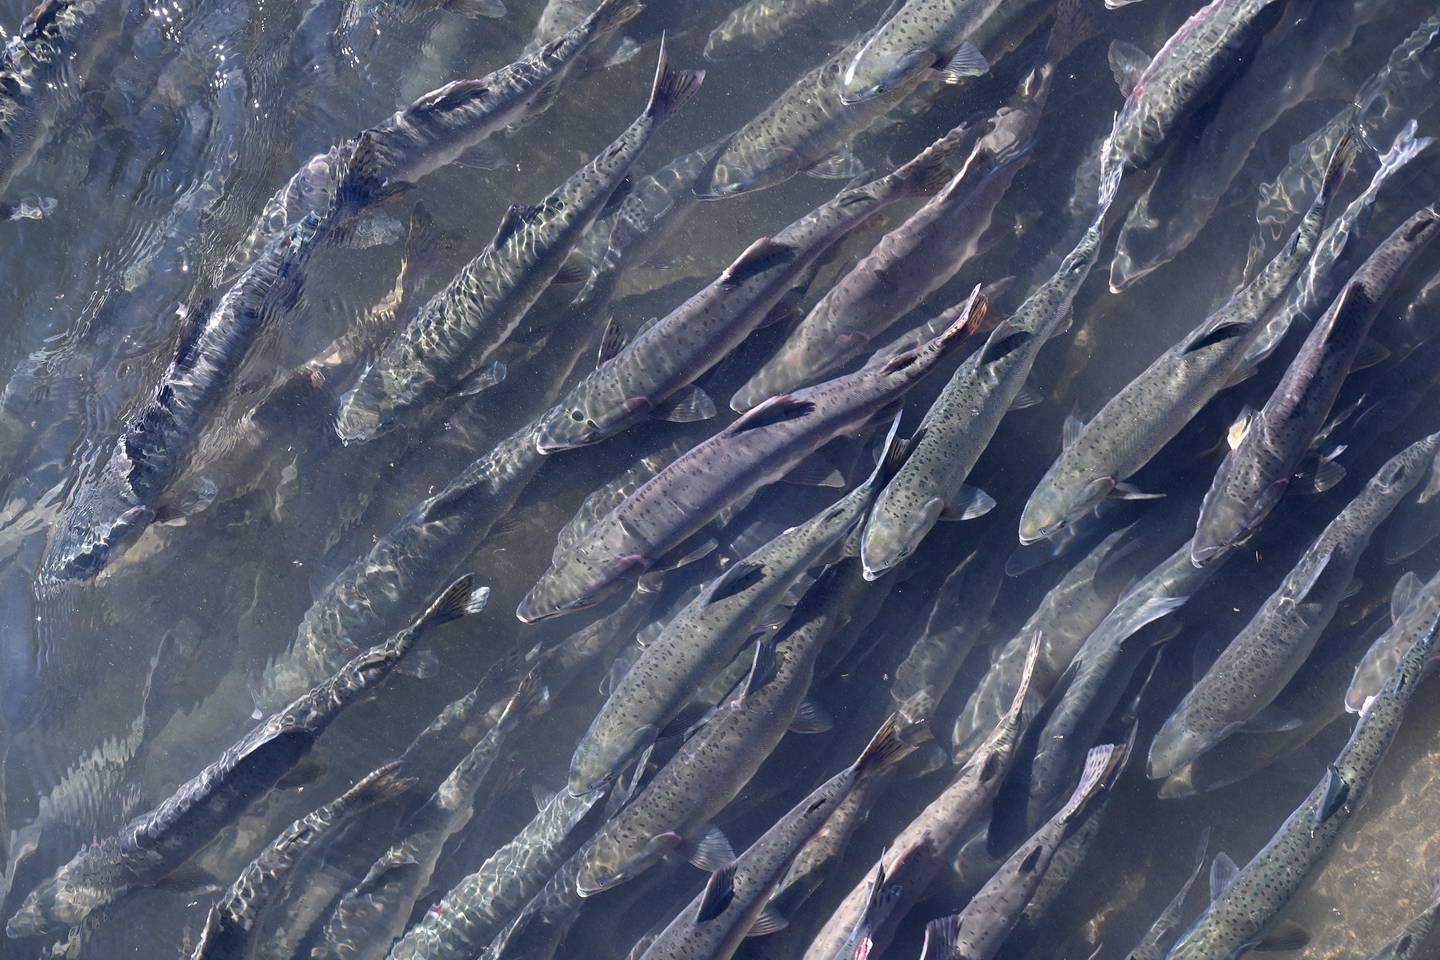 Salmon return to Ship Creek